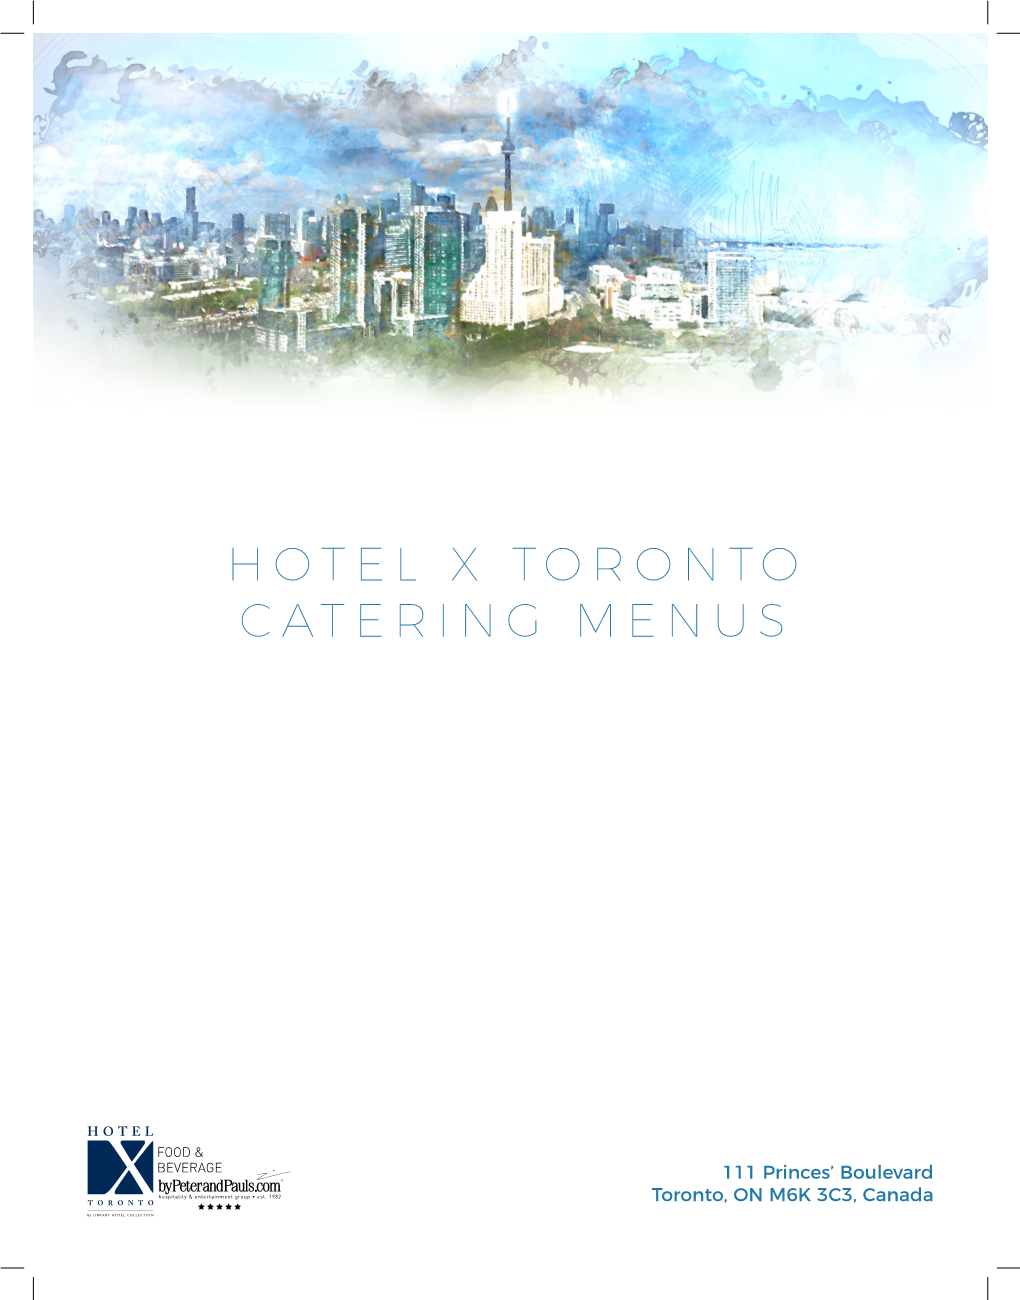 Hotel X Toronto Catering Menus